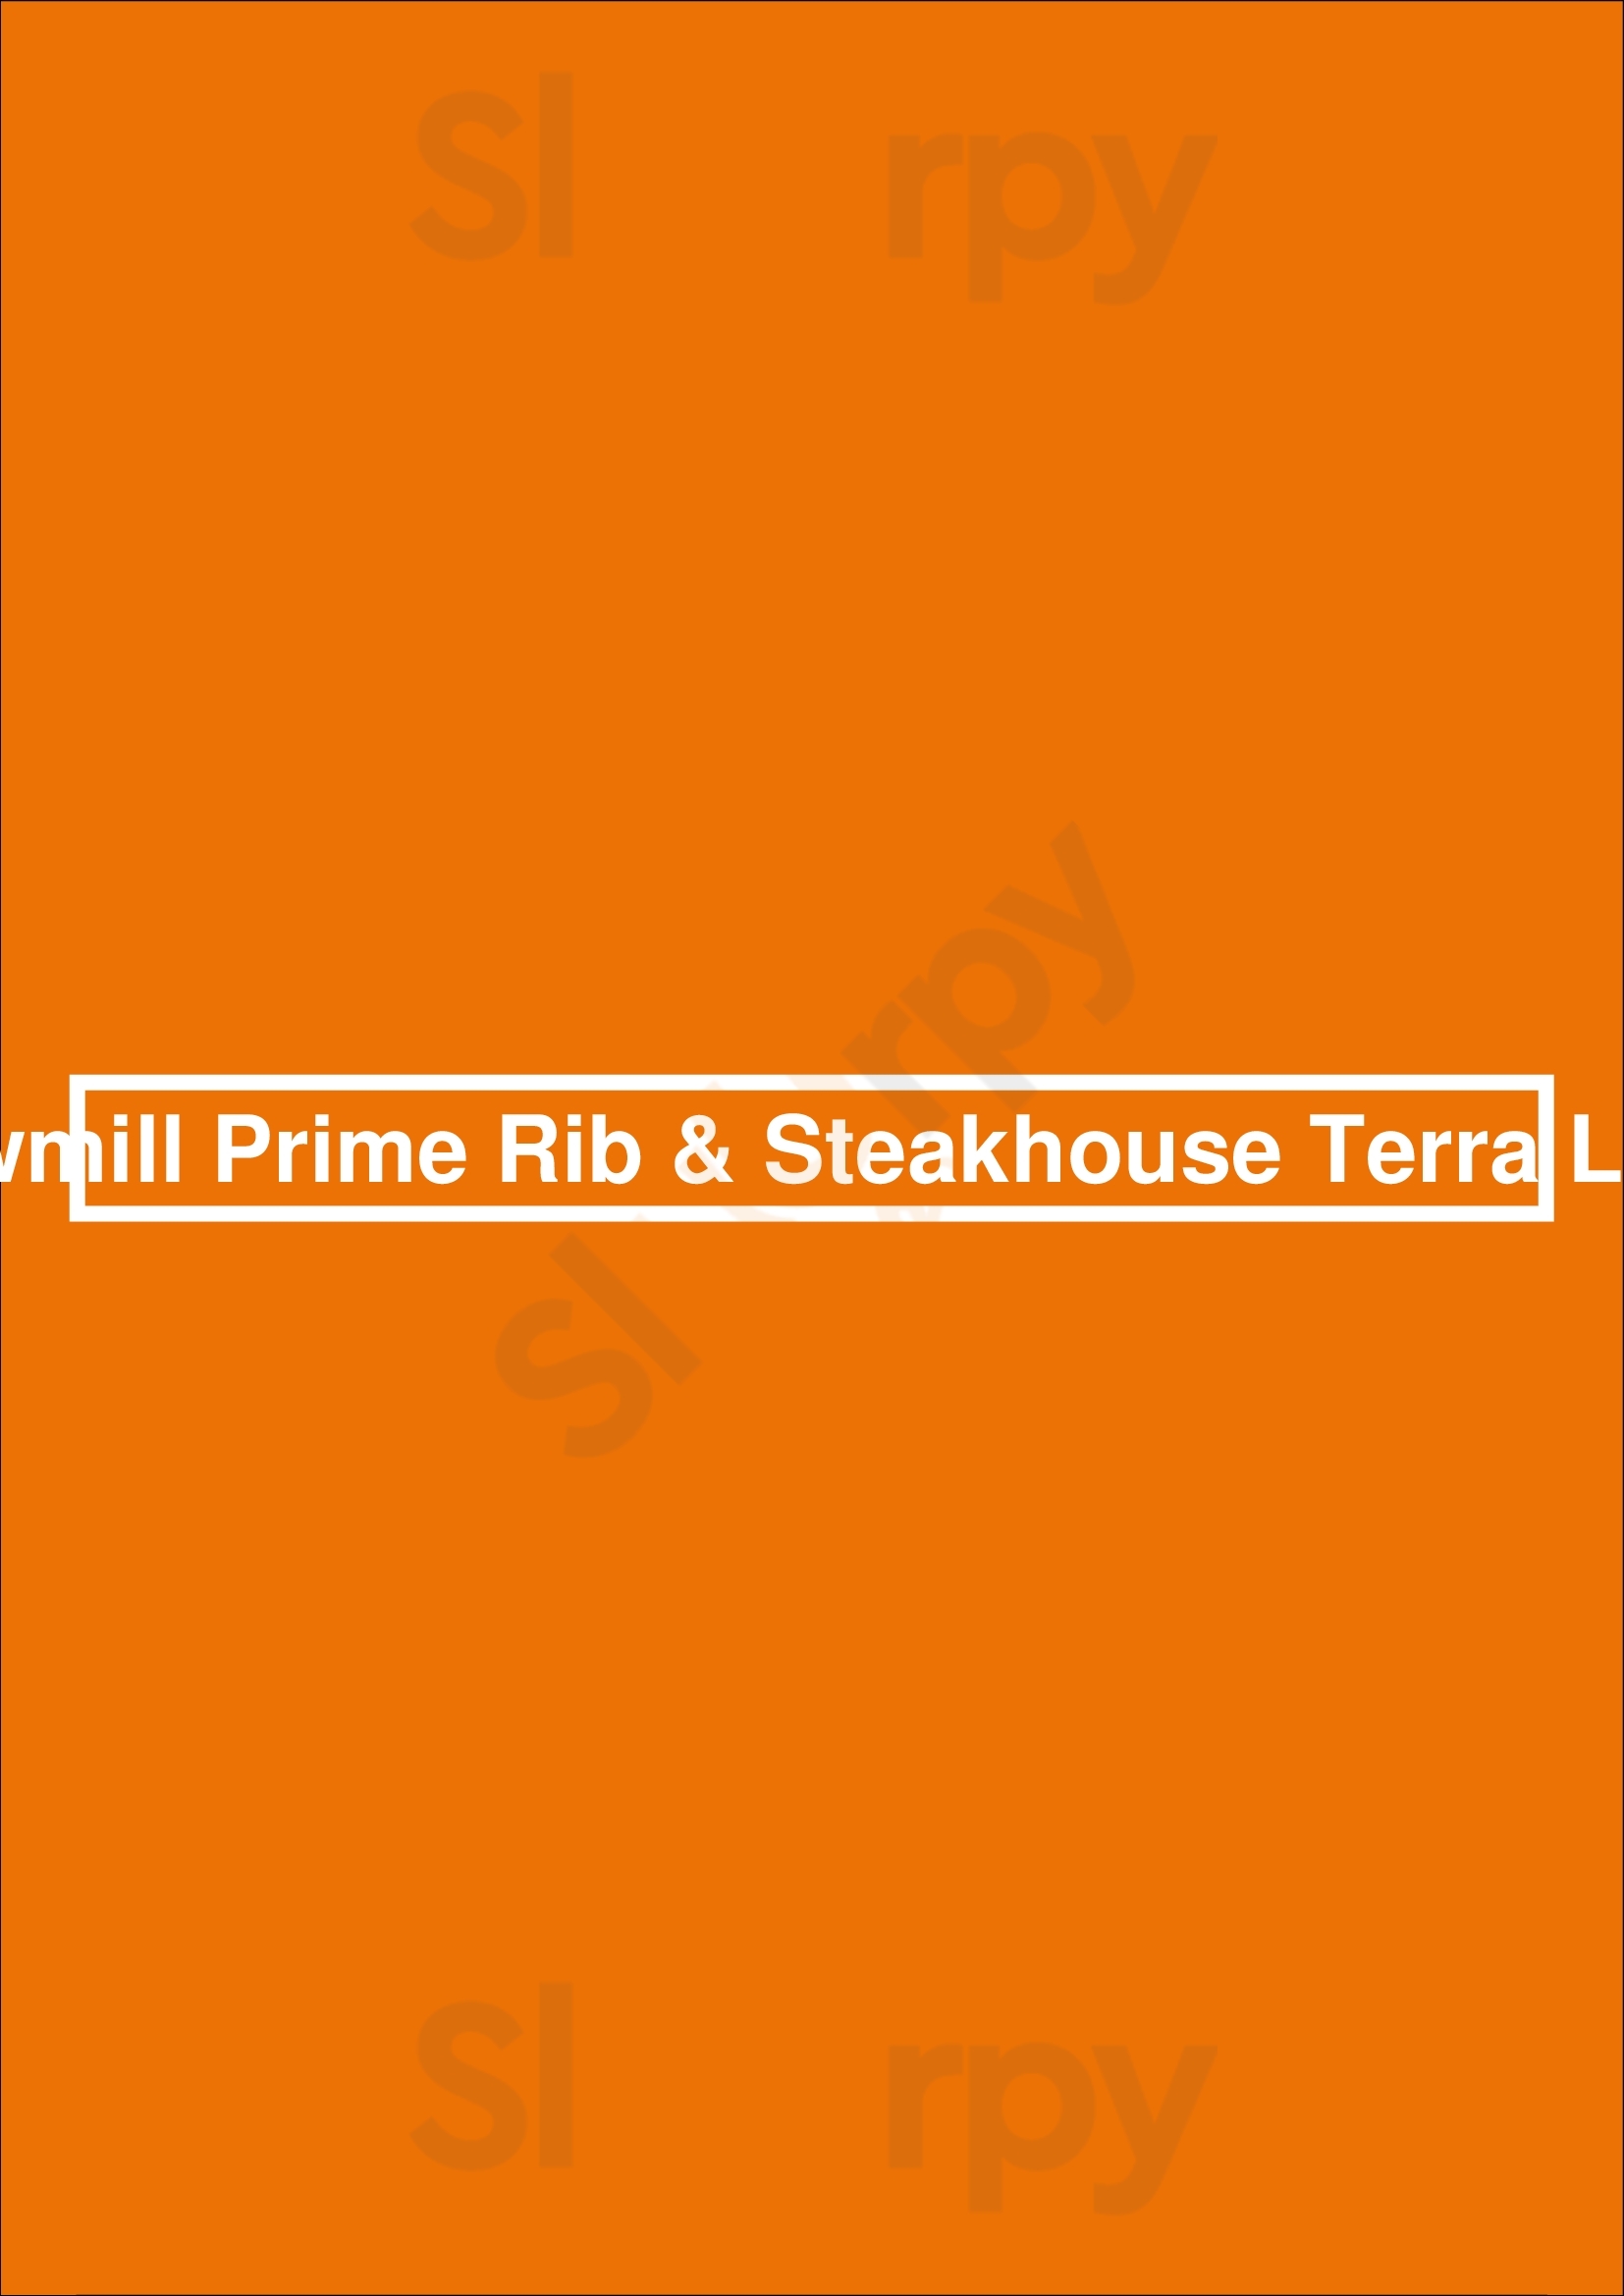 Sawmill Prime Rib & Steakhouse Terra Losa Edmonton Menu - 1